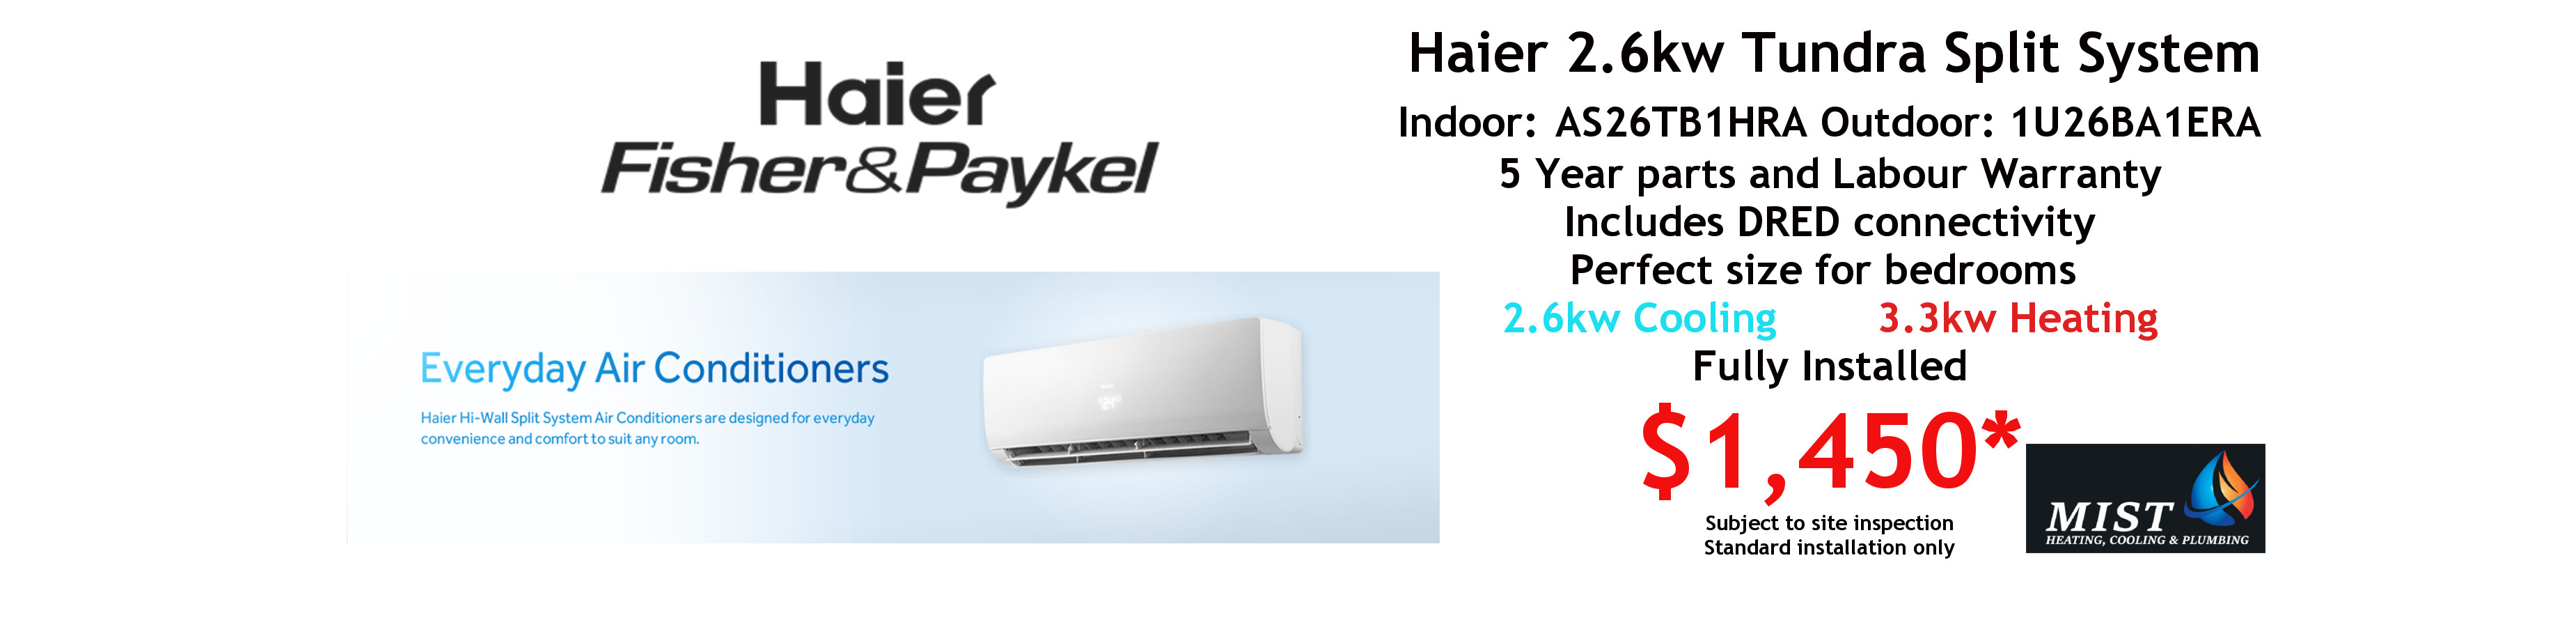 haier 2.6kw split system